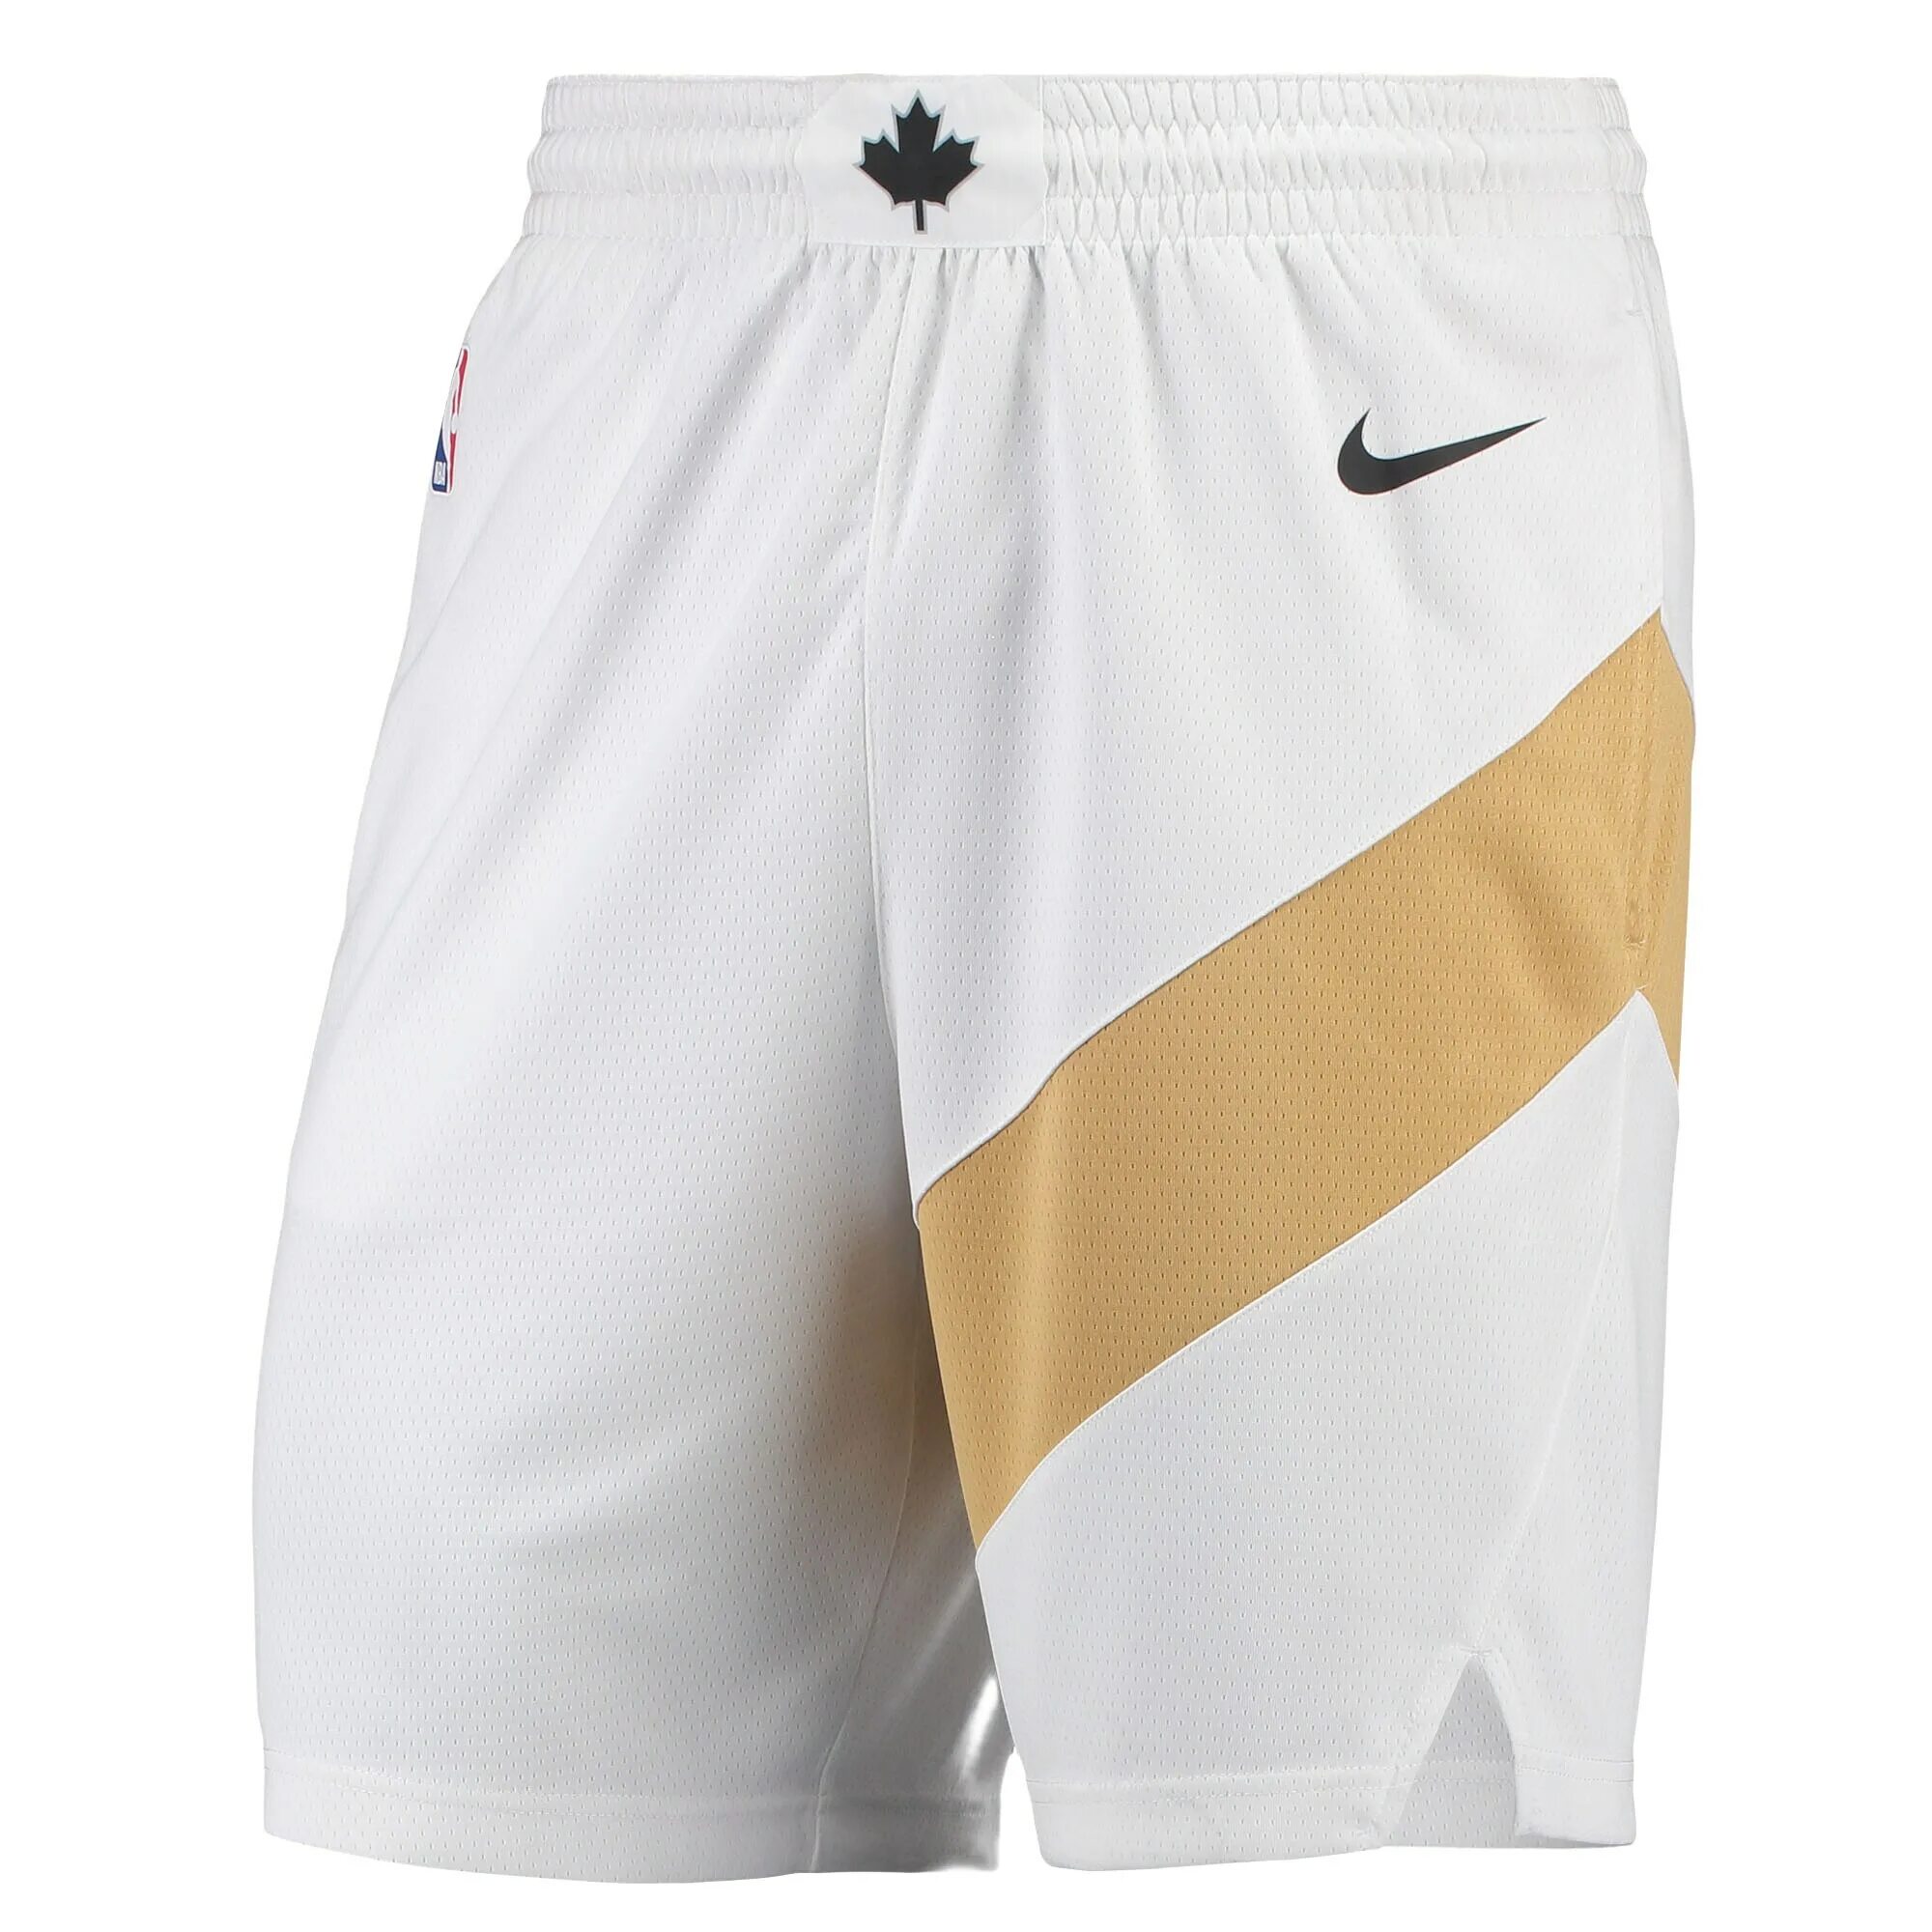 Шорты Toronto Raptors. Nike Dri Fit Basketball shorts 3.0. Шорты Toronto 21. Шорты Торонто Рэпторс. Short edition